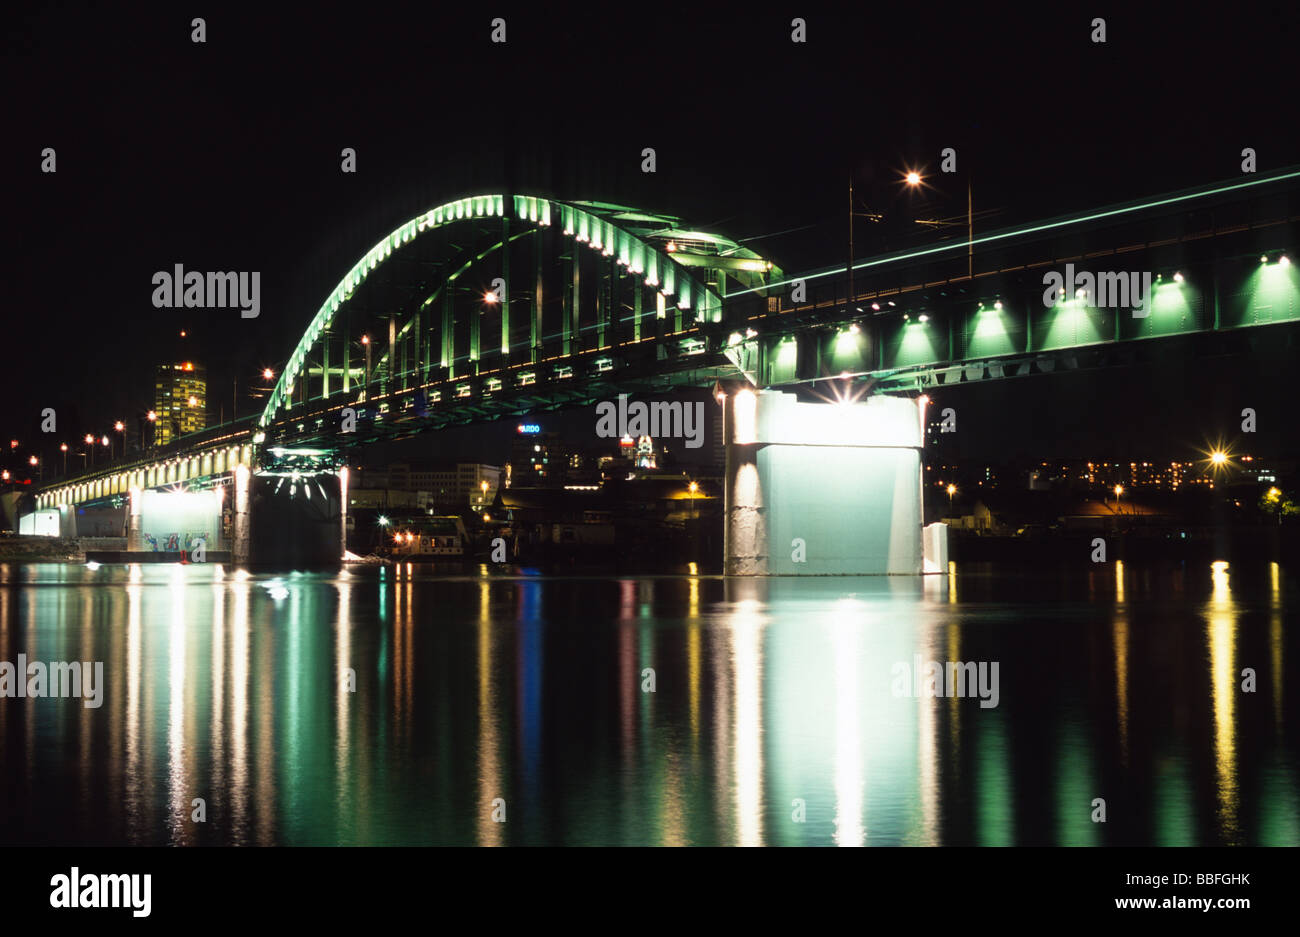 Illuminated Ulica Zemunski bridge crossing the Sava river at night in Belgrade, Serbia, Balkans Stock Photo